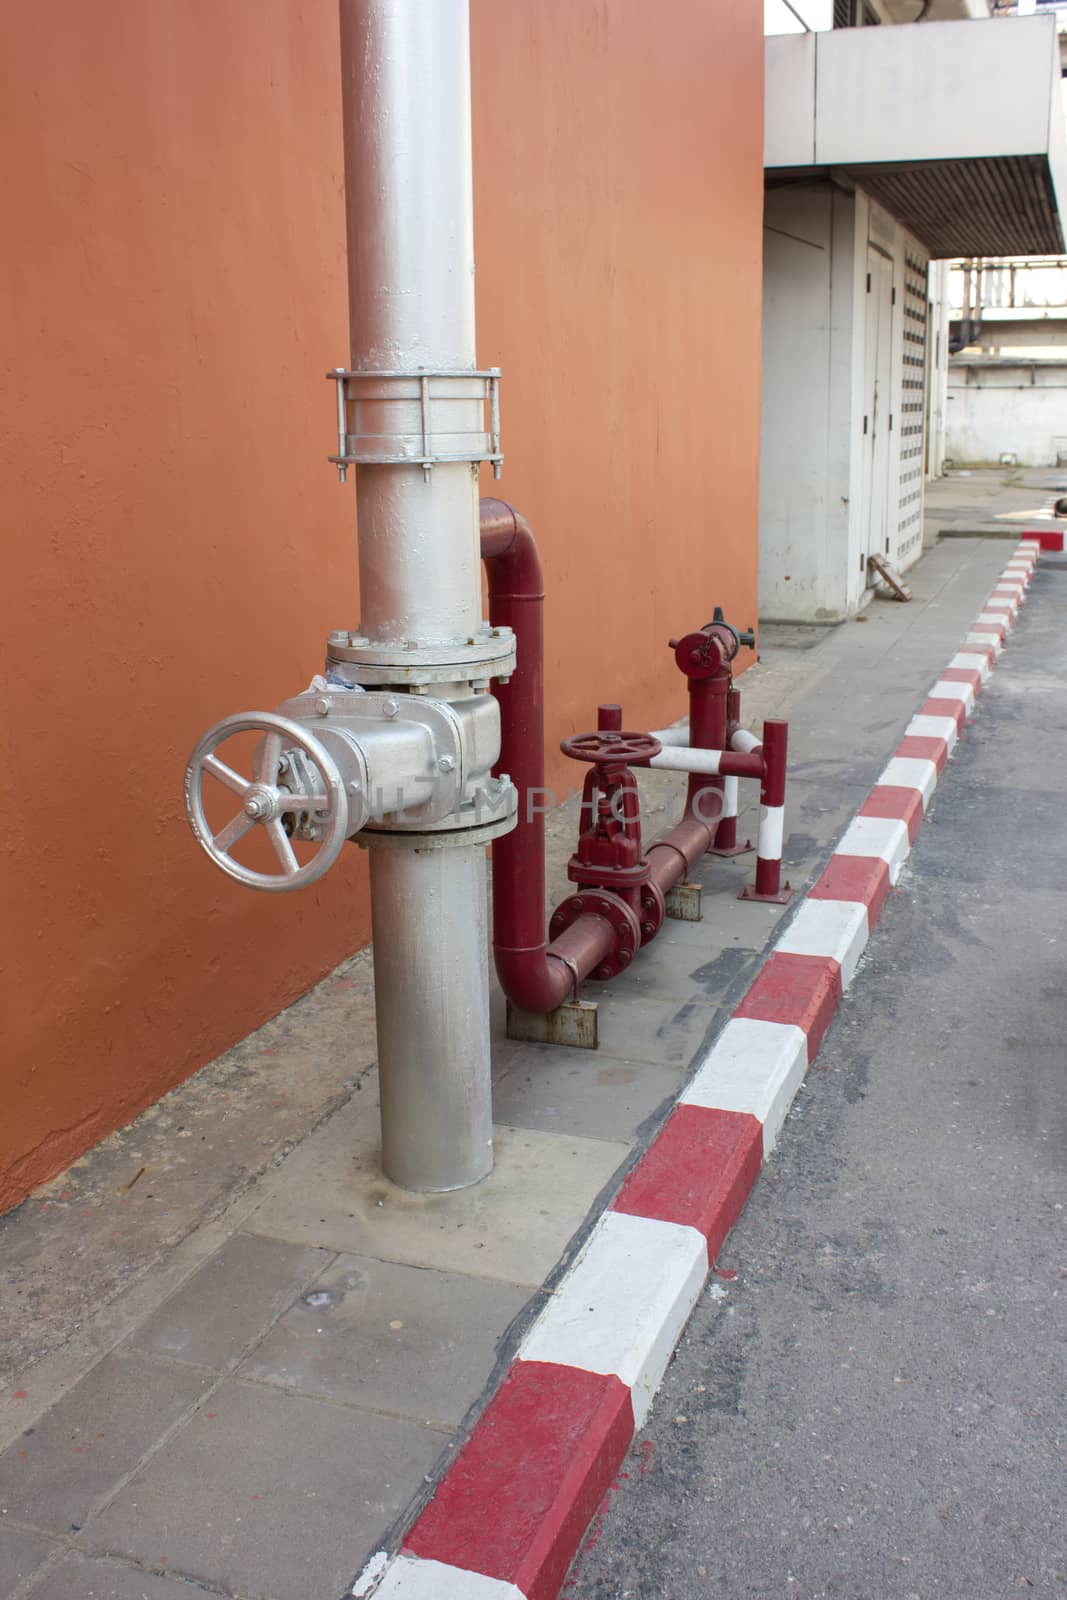 Pipe Water Fire hydrant emergency